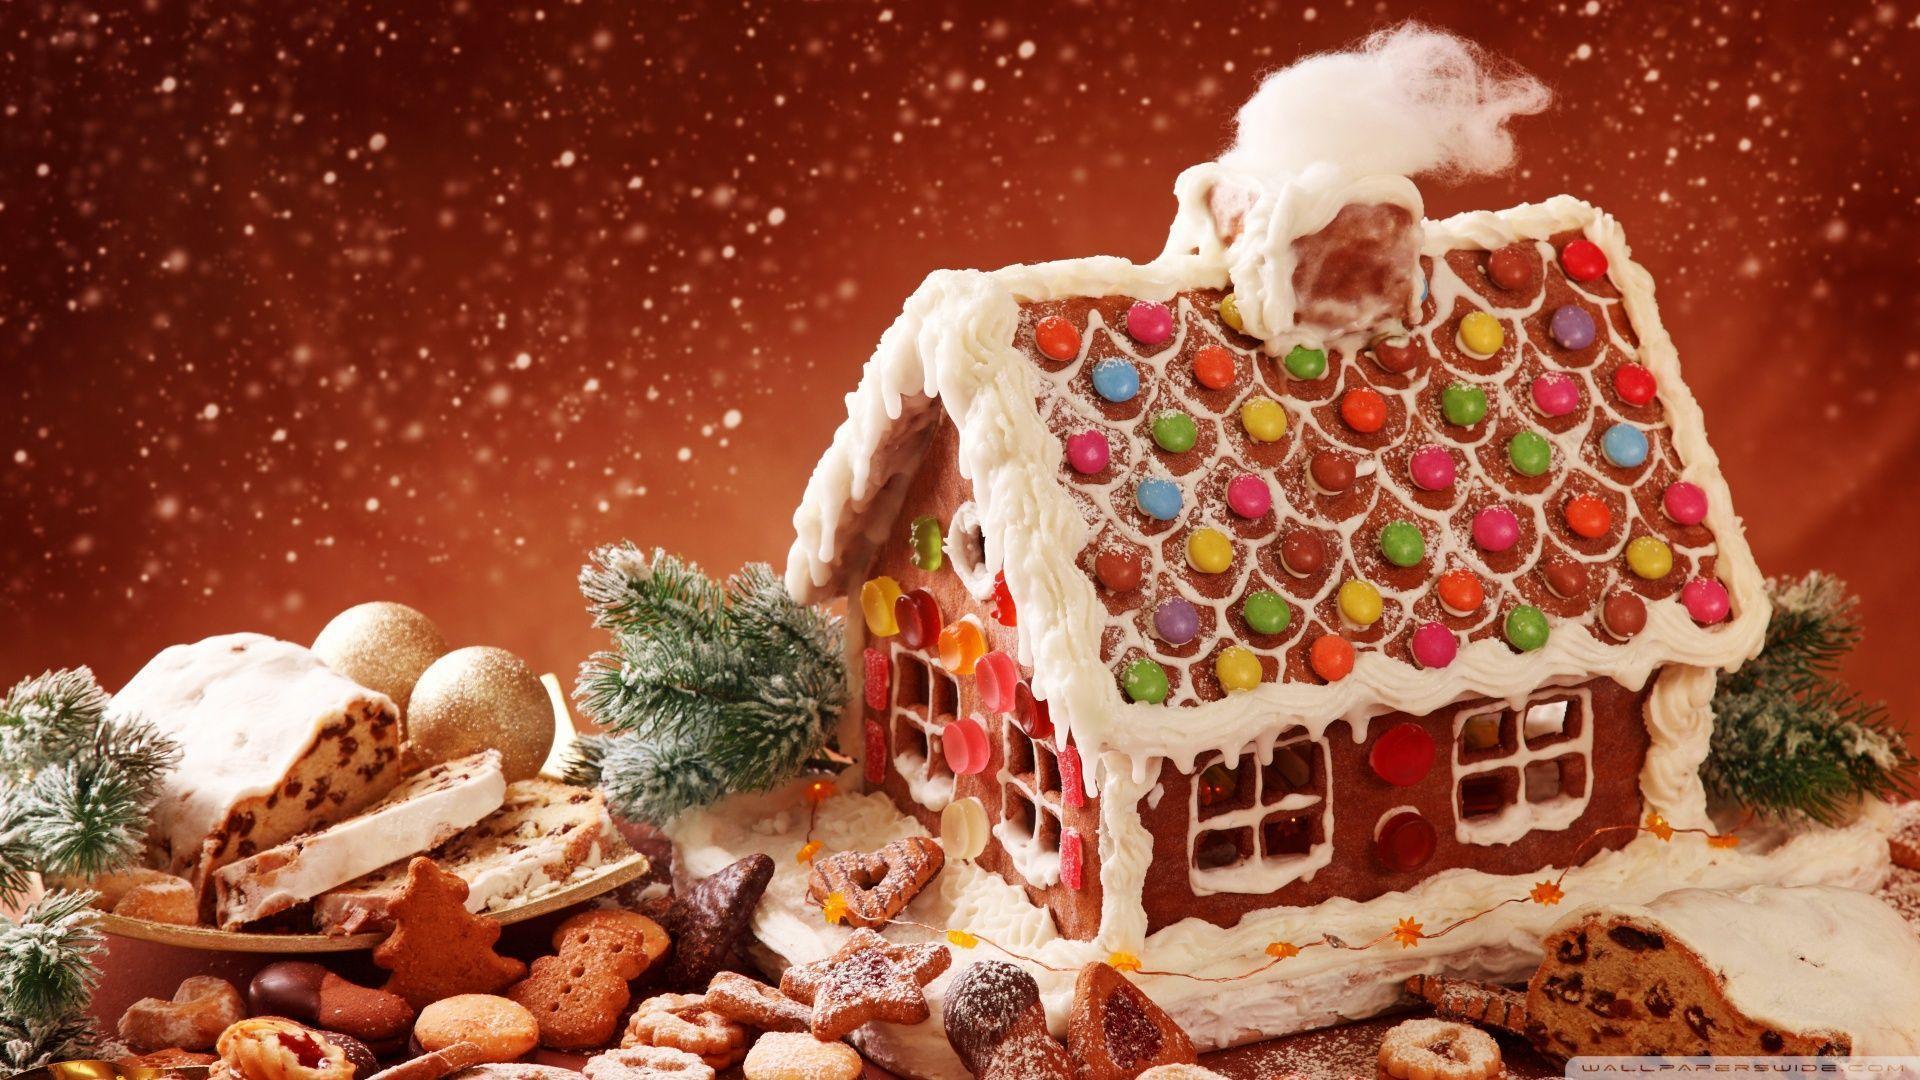 Gingerbread House And Cookies HD desktop wallpaper, High